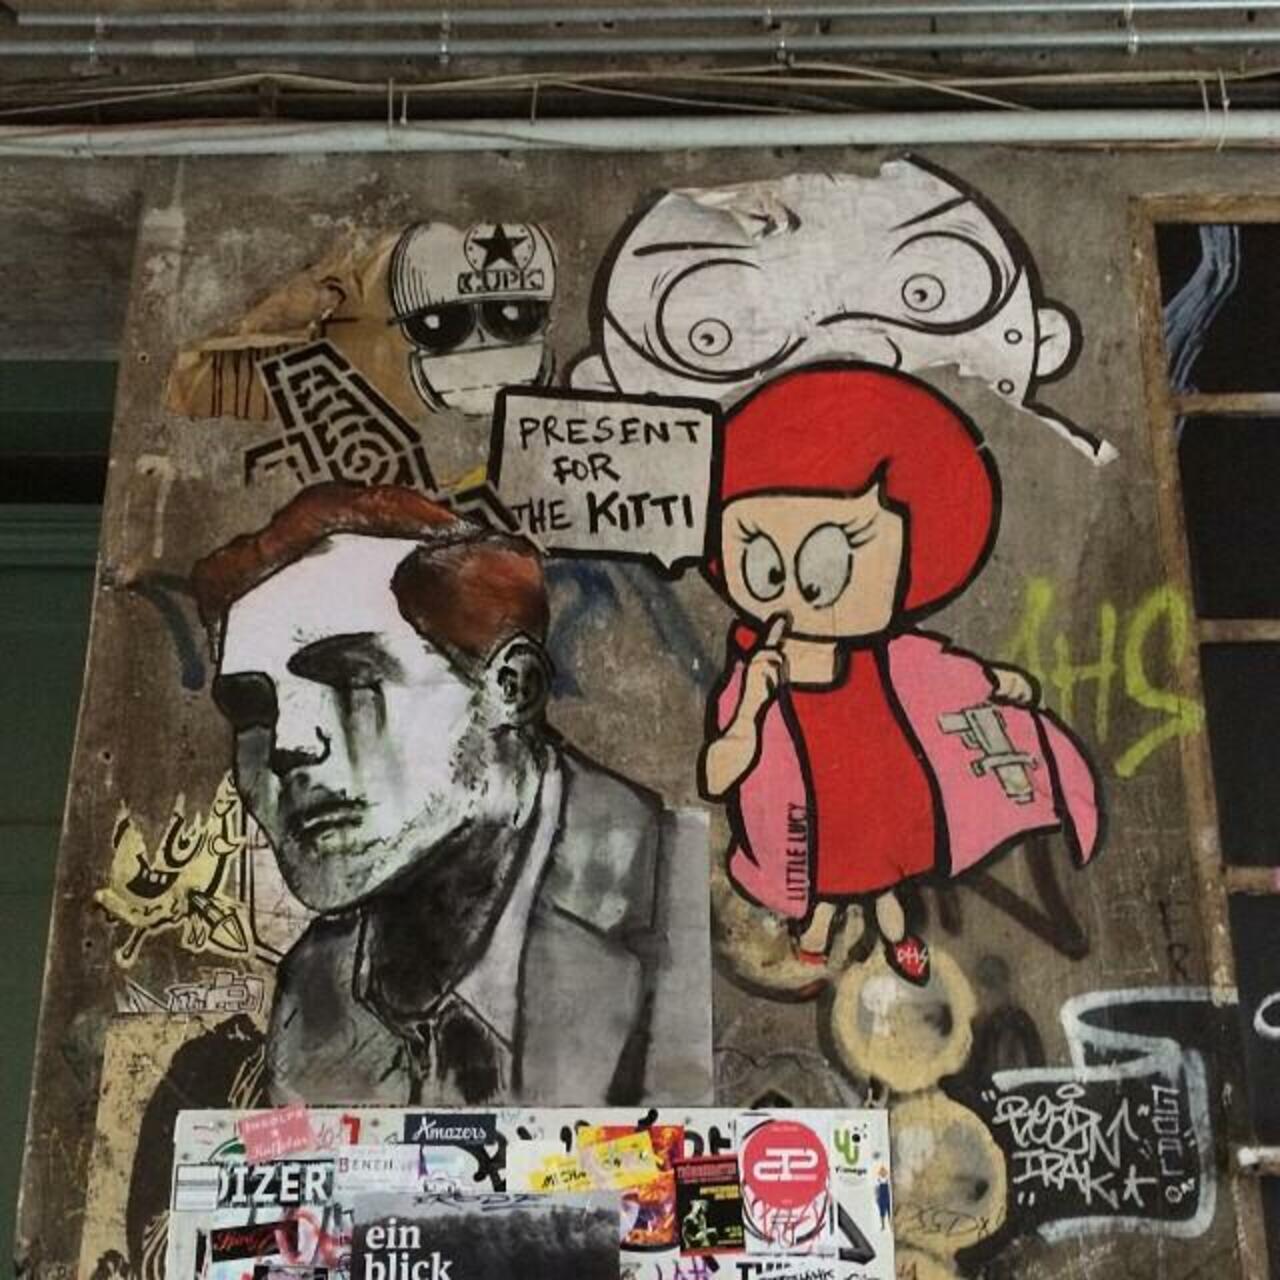 #Berlin #Allemagne #streetart #street #art #urbanart #urbantag #graffiti #streetartberlin by becombegeek http://t.co/qv6L2DFvOB